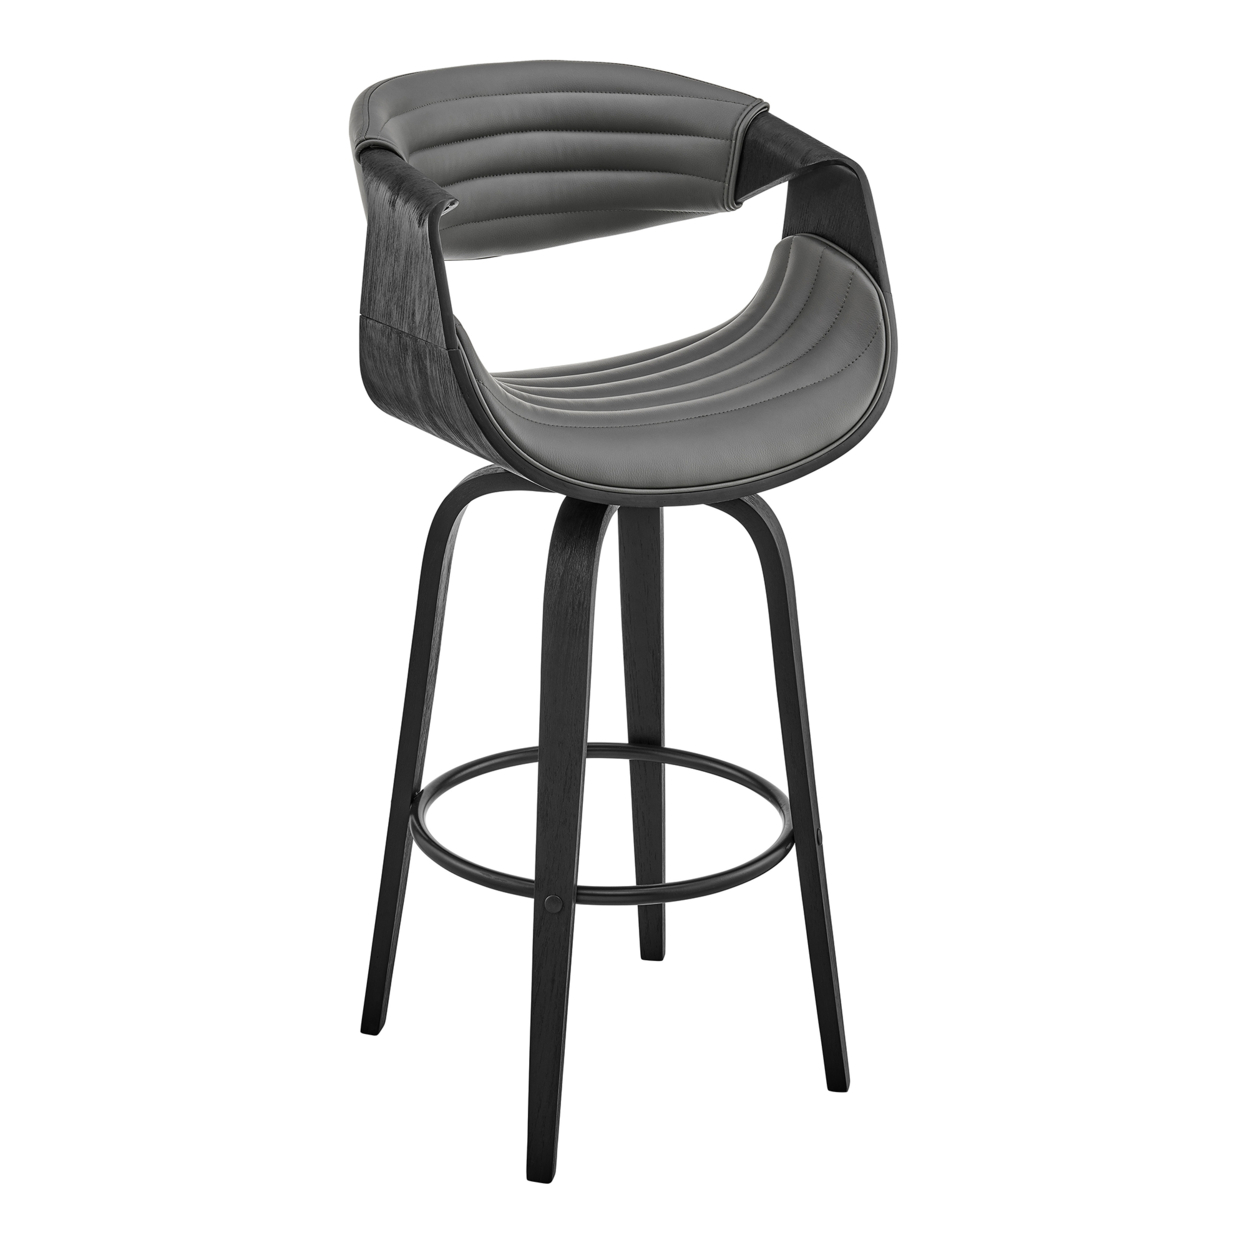 Swivel Bar Stool With Leatherette Bucket Seat, Gray And Black- Saltoro Sherpi